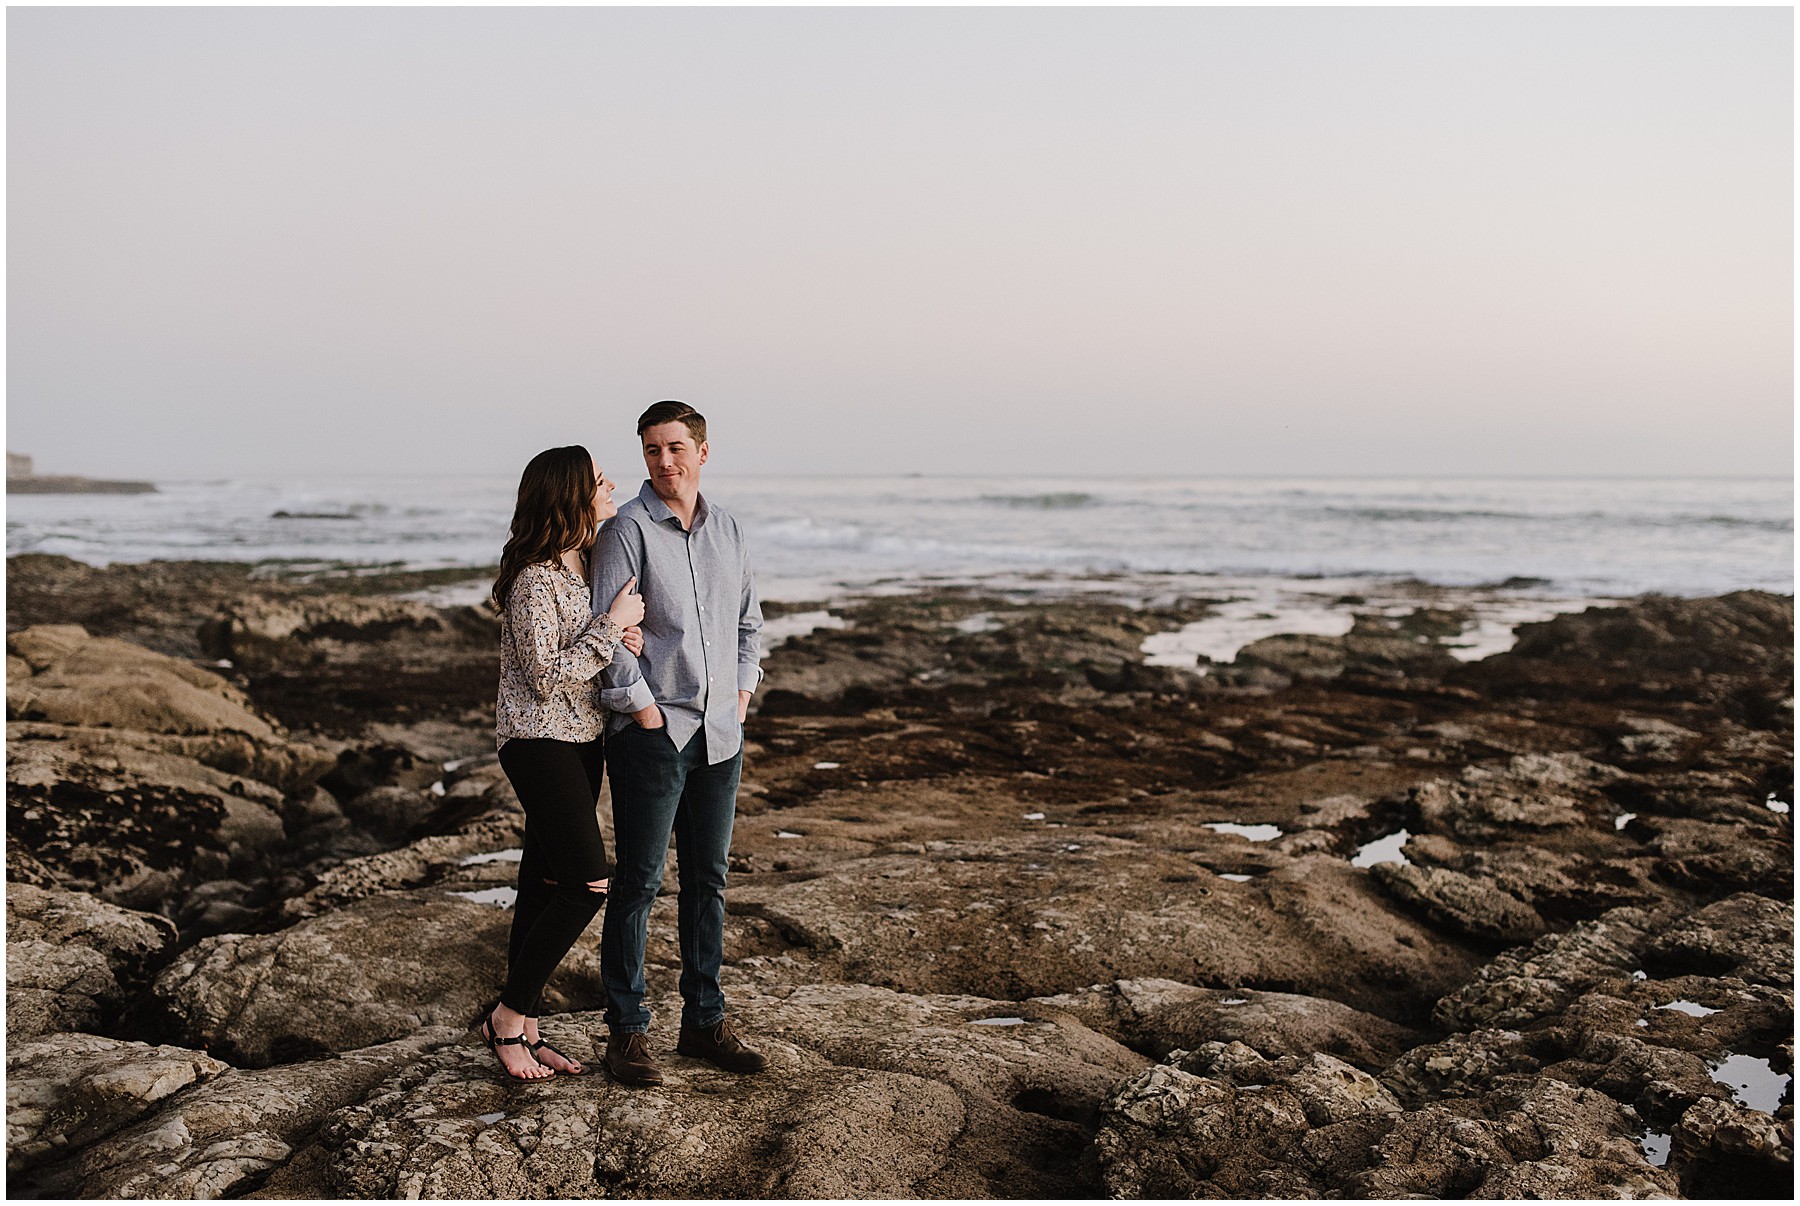 Julia & Nick Engagement at Shell Beach near The Cliffs Resort in California